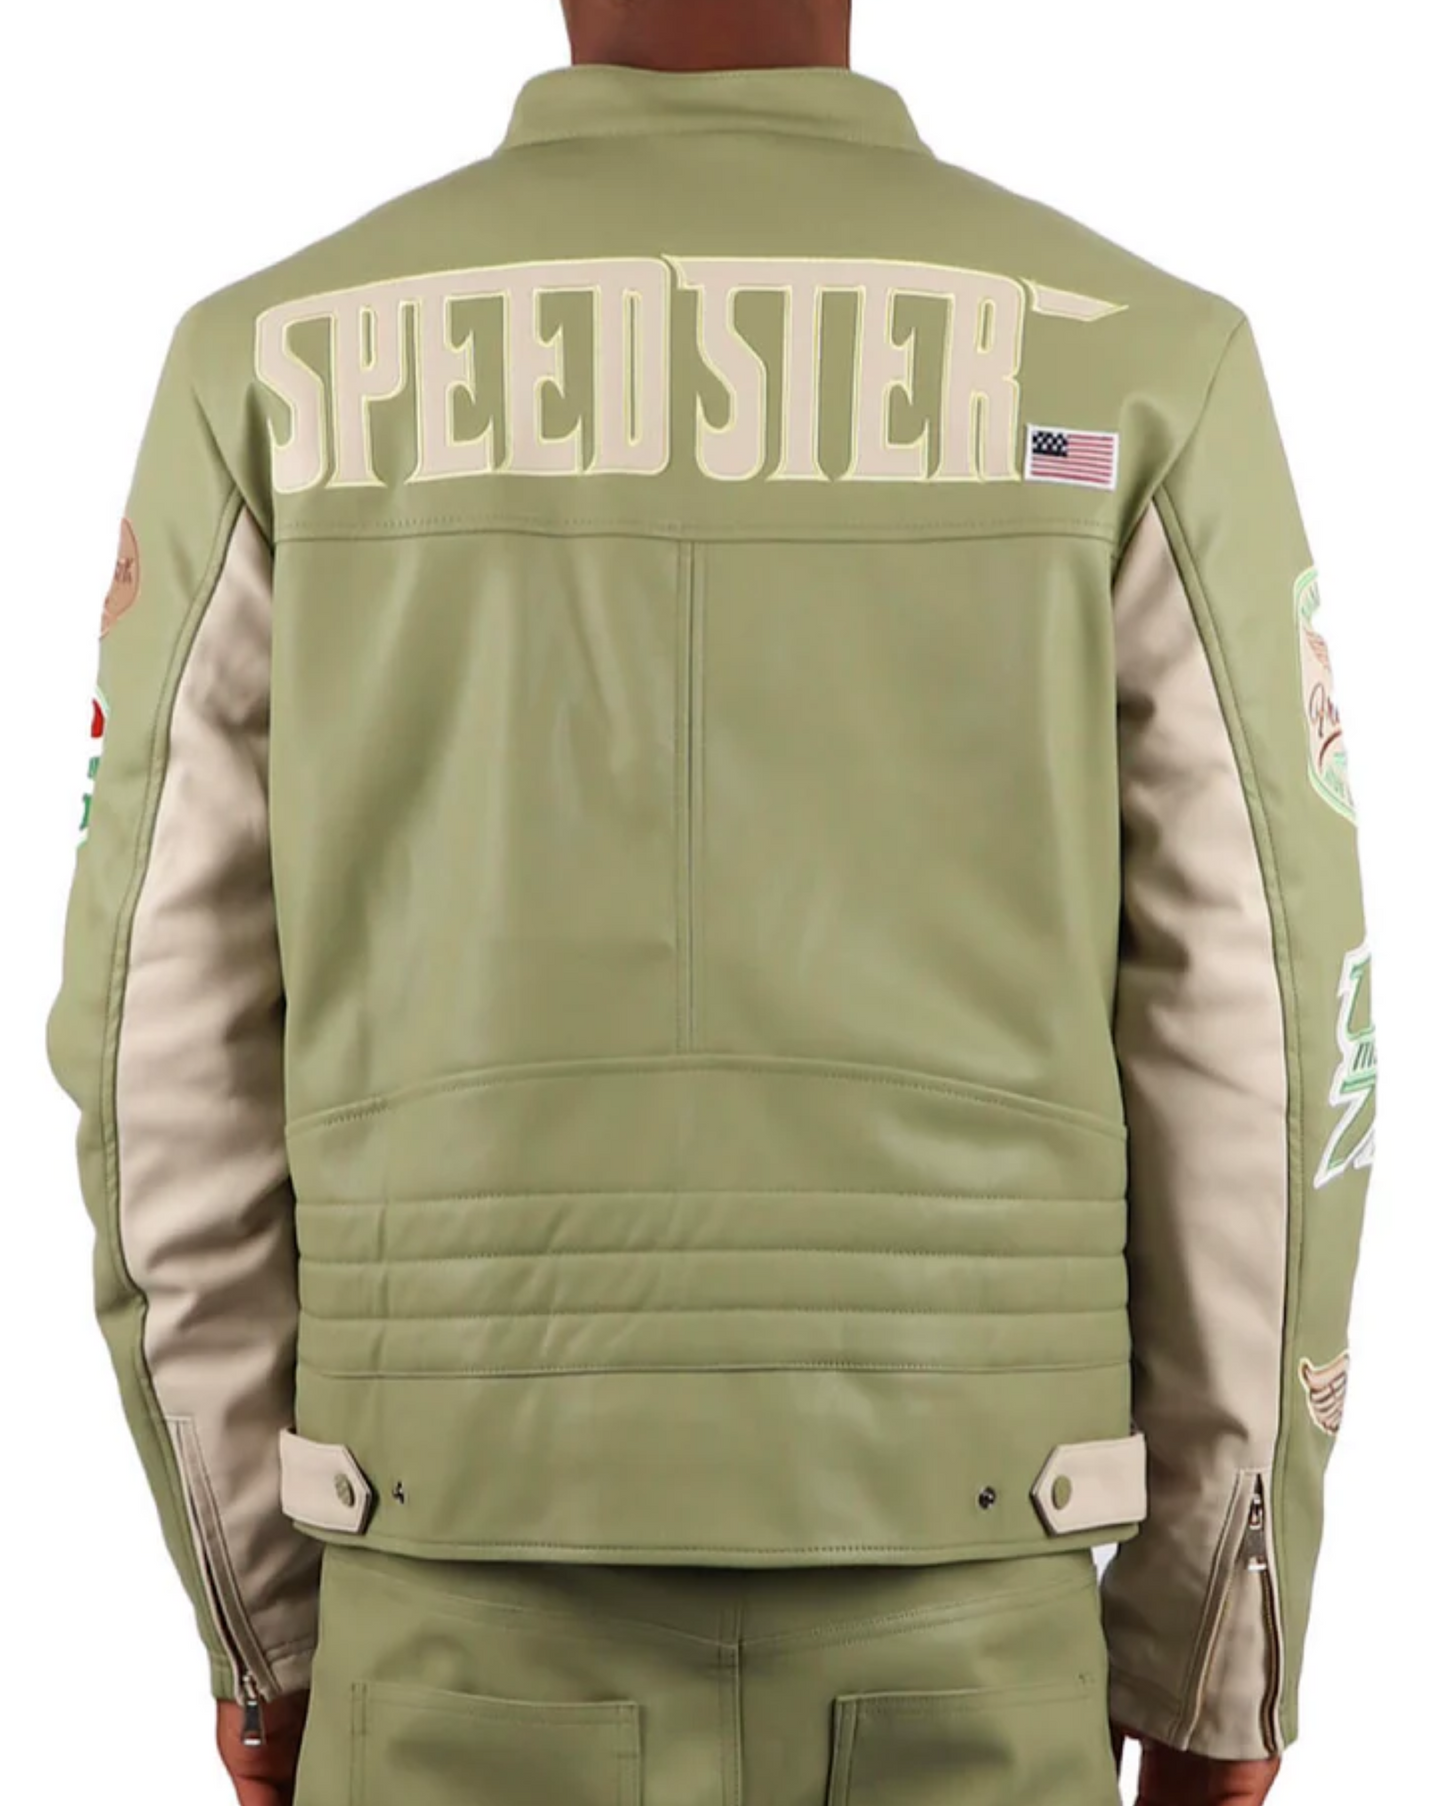 Speedster Jacket